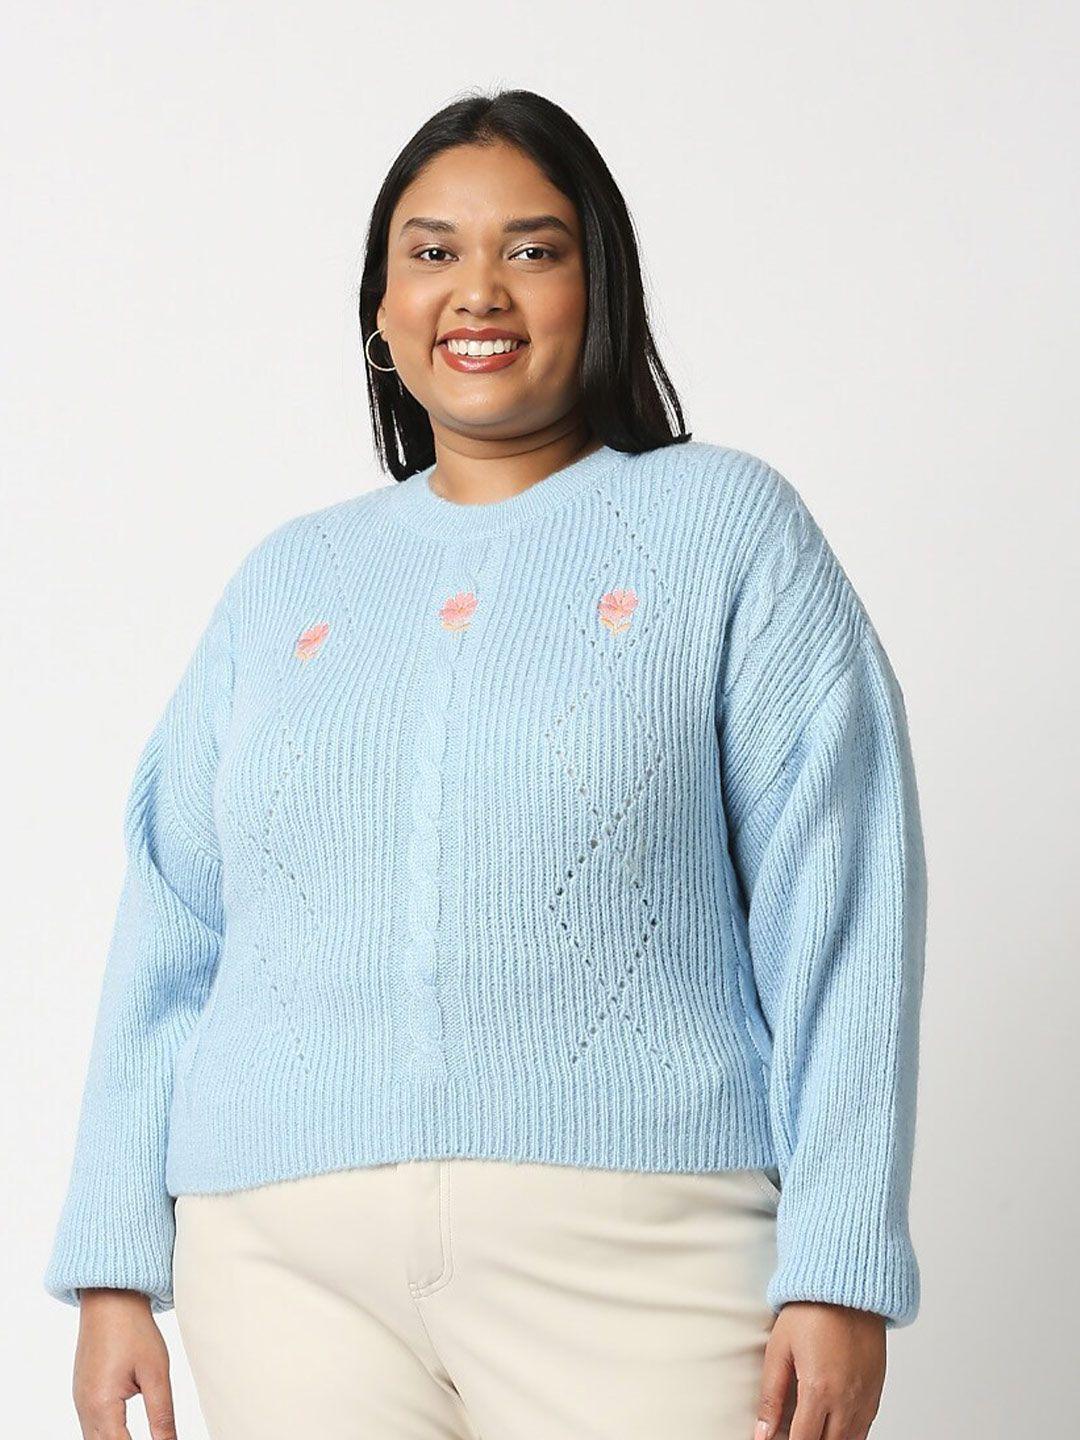 20dresses women plus size blue sweater top